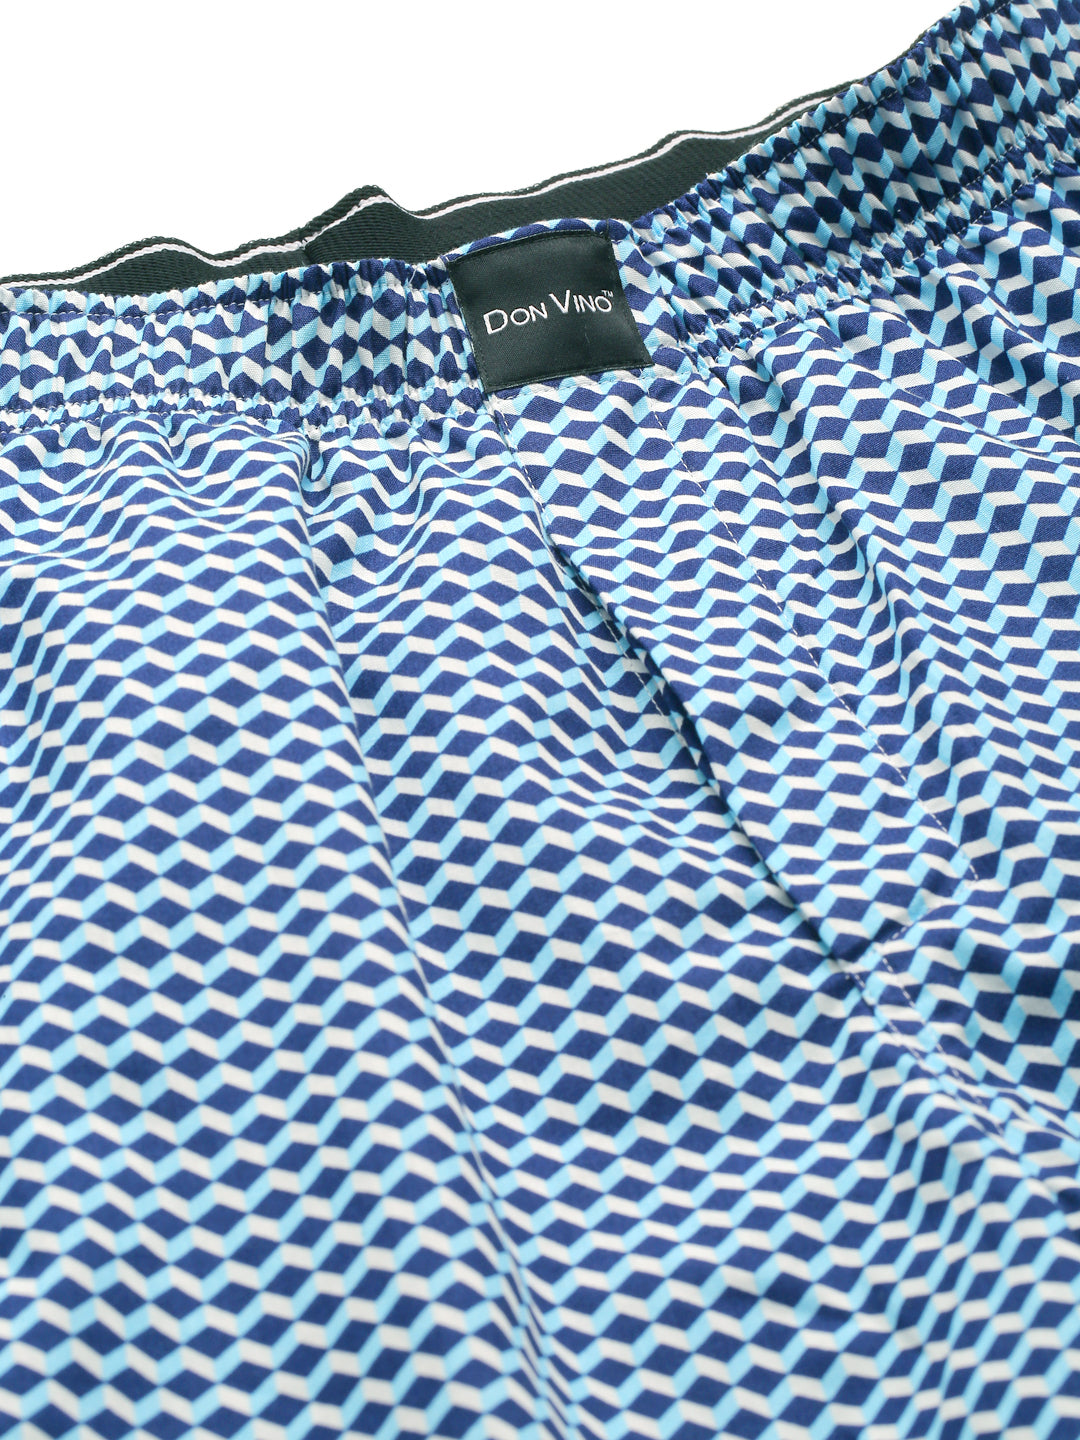 Don Vino Men's Ocean Blue Printed Boxer Shorts